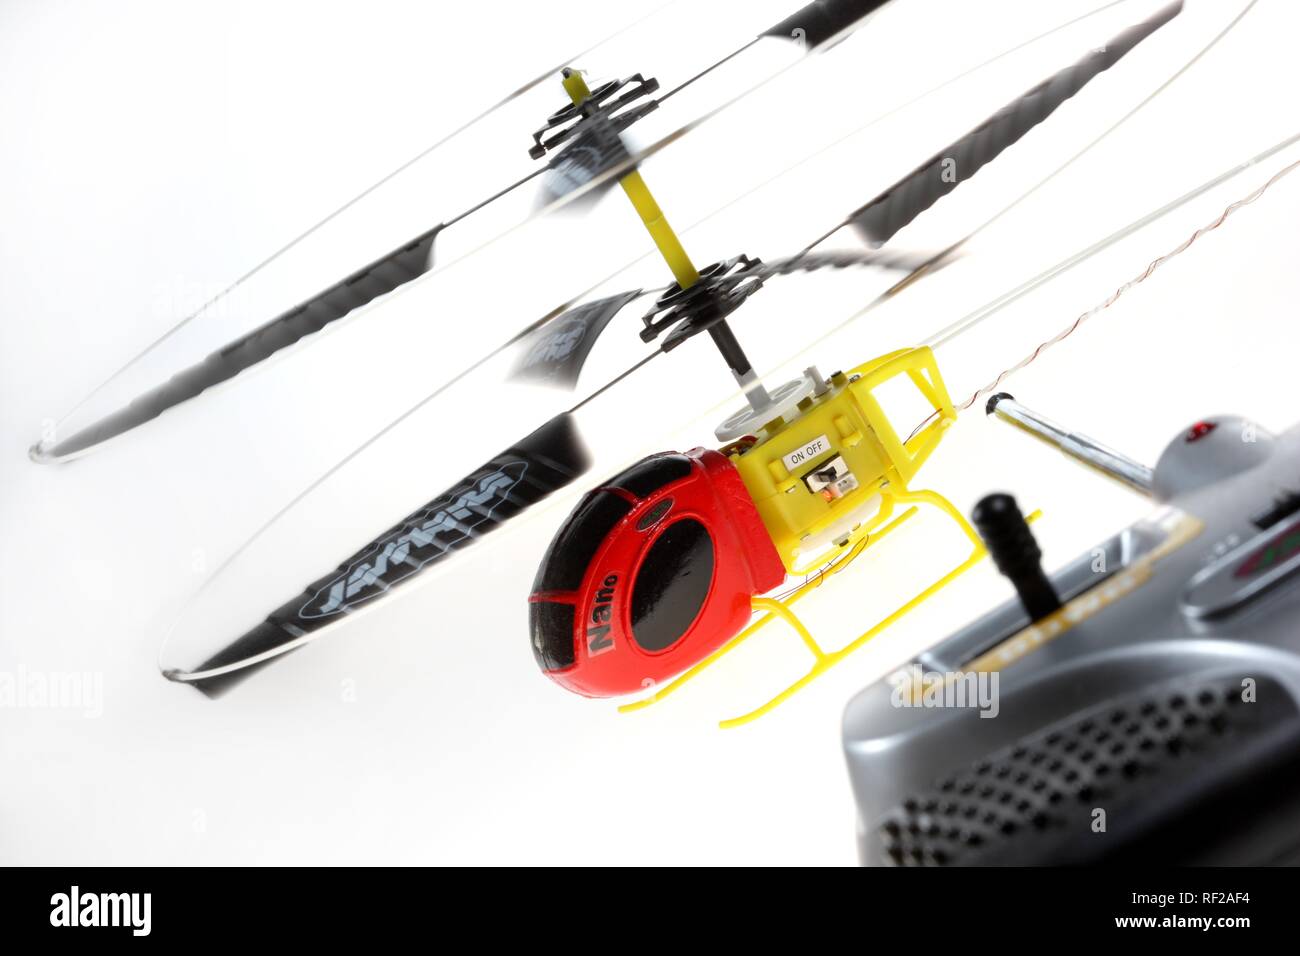 Helicóptero en miniatura fotografías e imágenes de alta resolución - Alamy